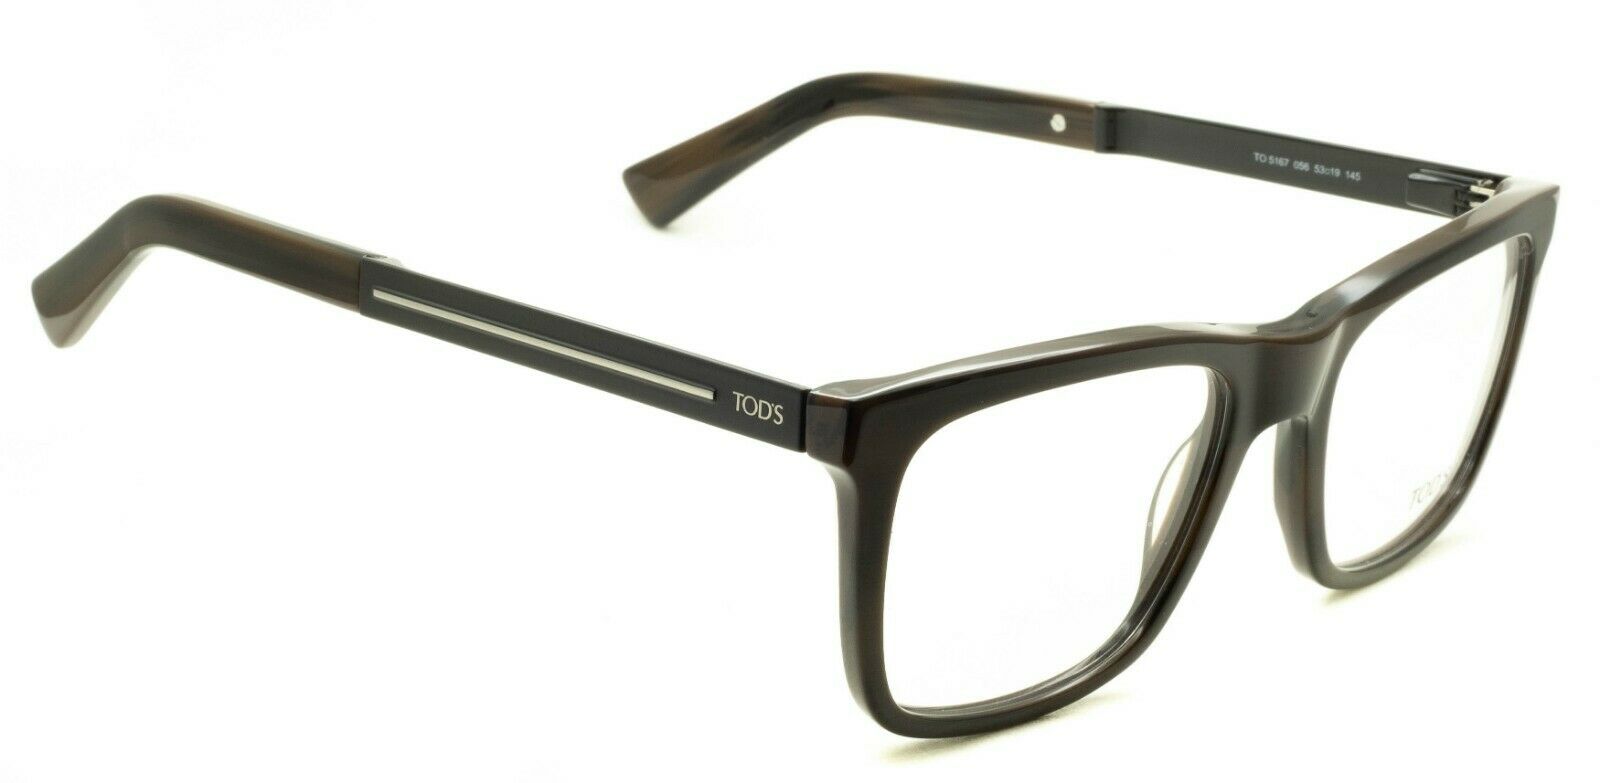 TOD'S TO 5167 056 53mm Eyewear FRAMES Glasses RX Optical Eyeglasses New - Italy